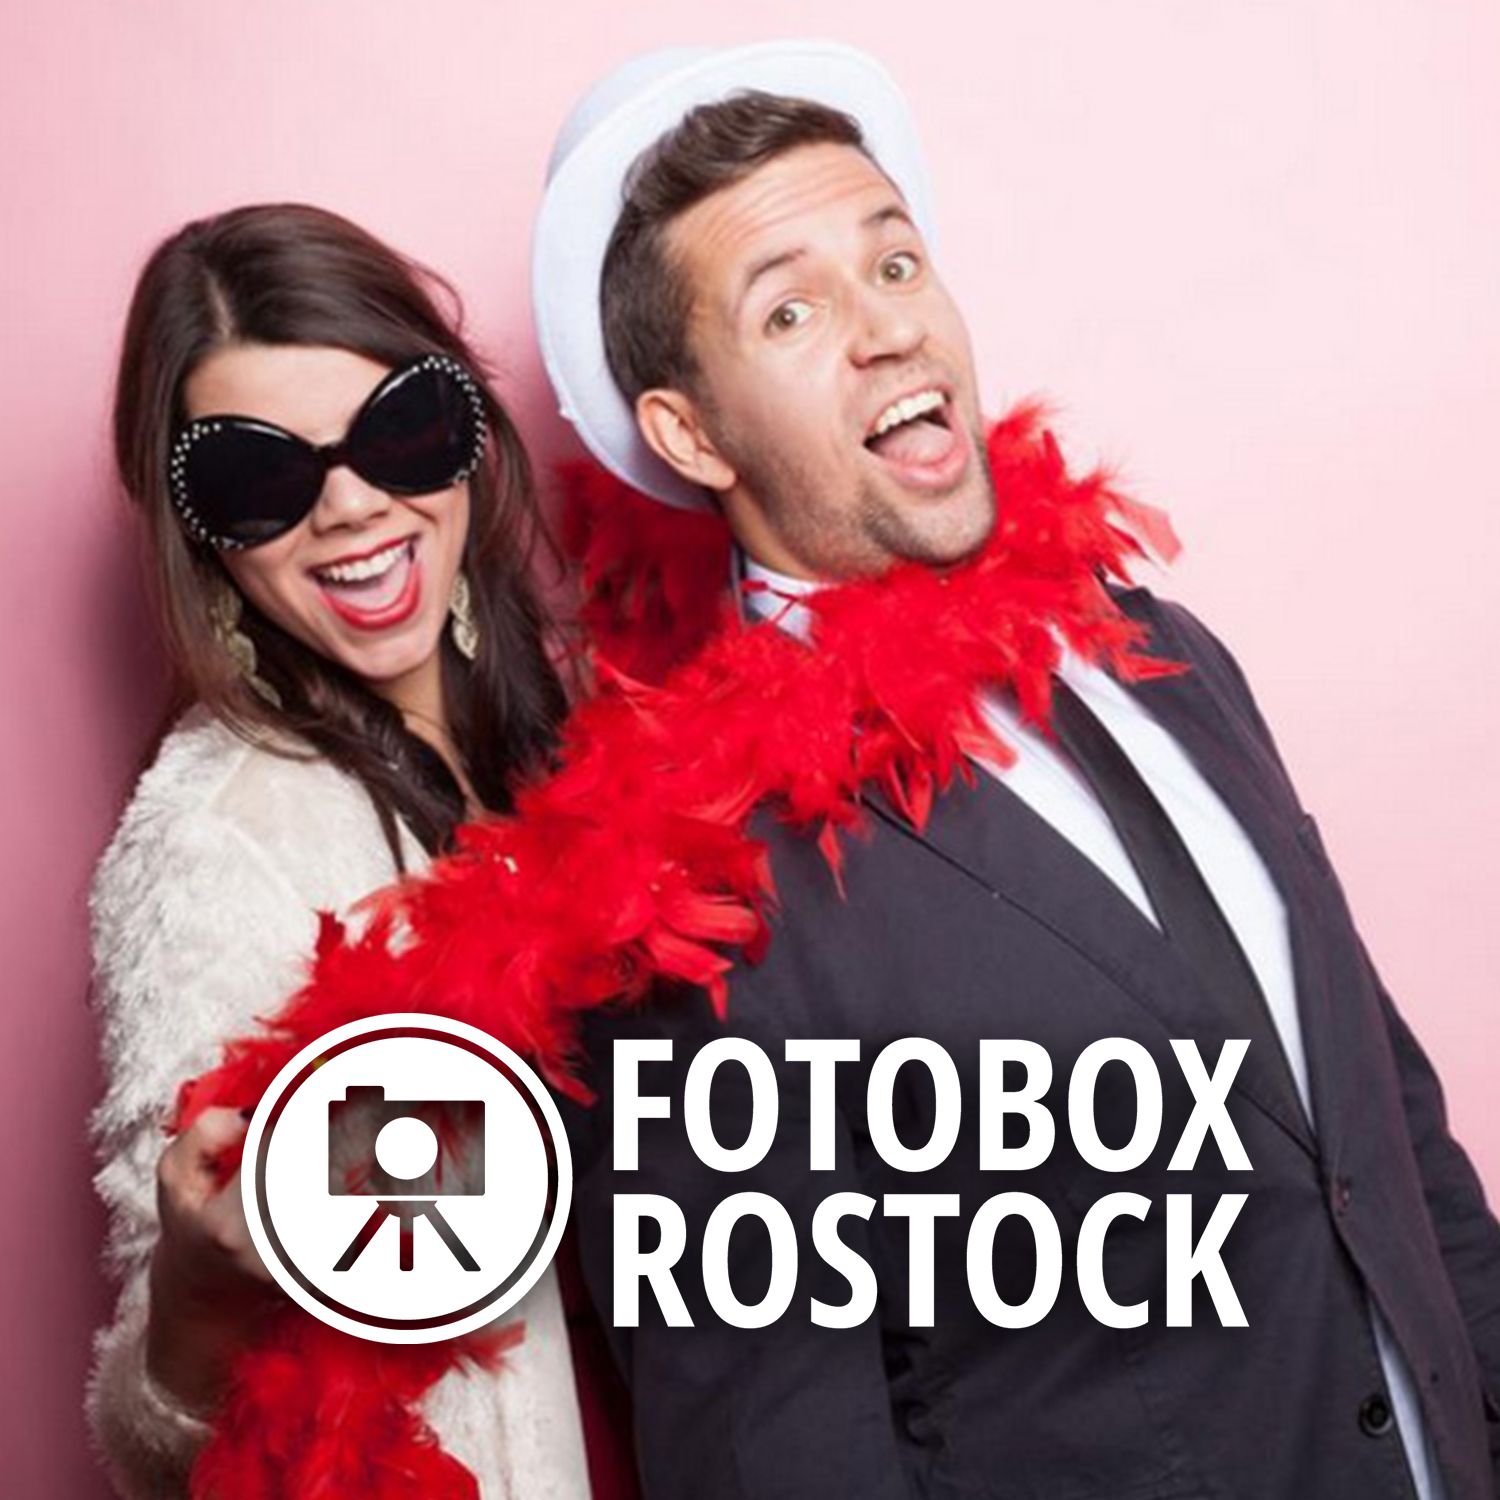 Fotobox Rostock
Fotobox in Rostock
Photobooth